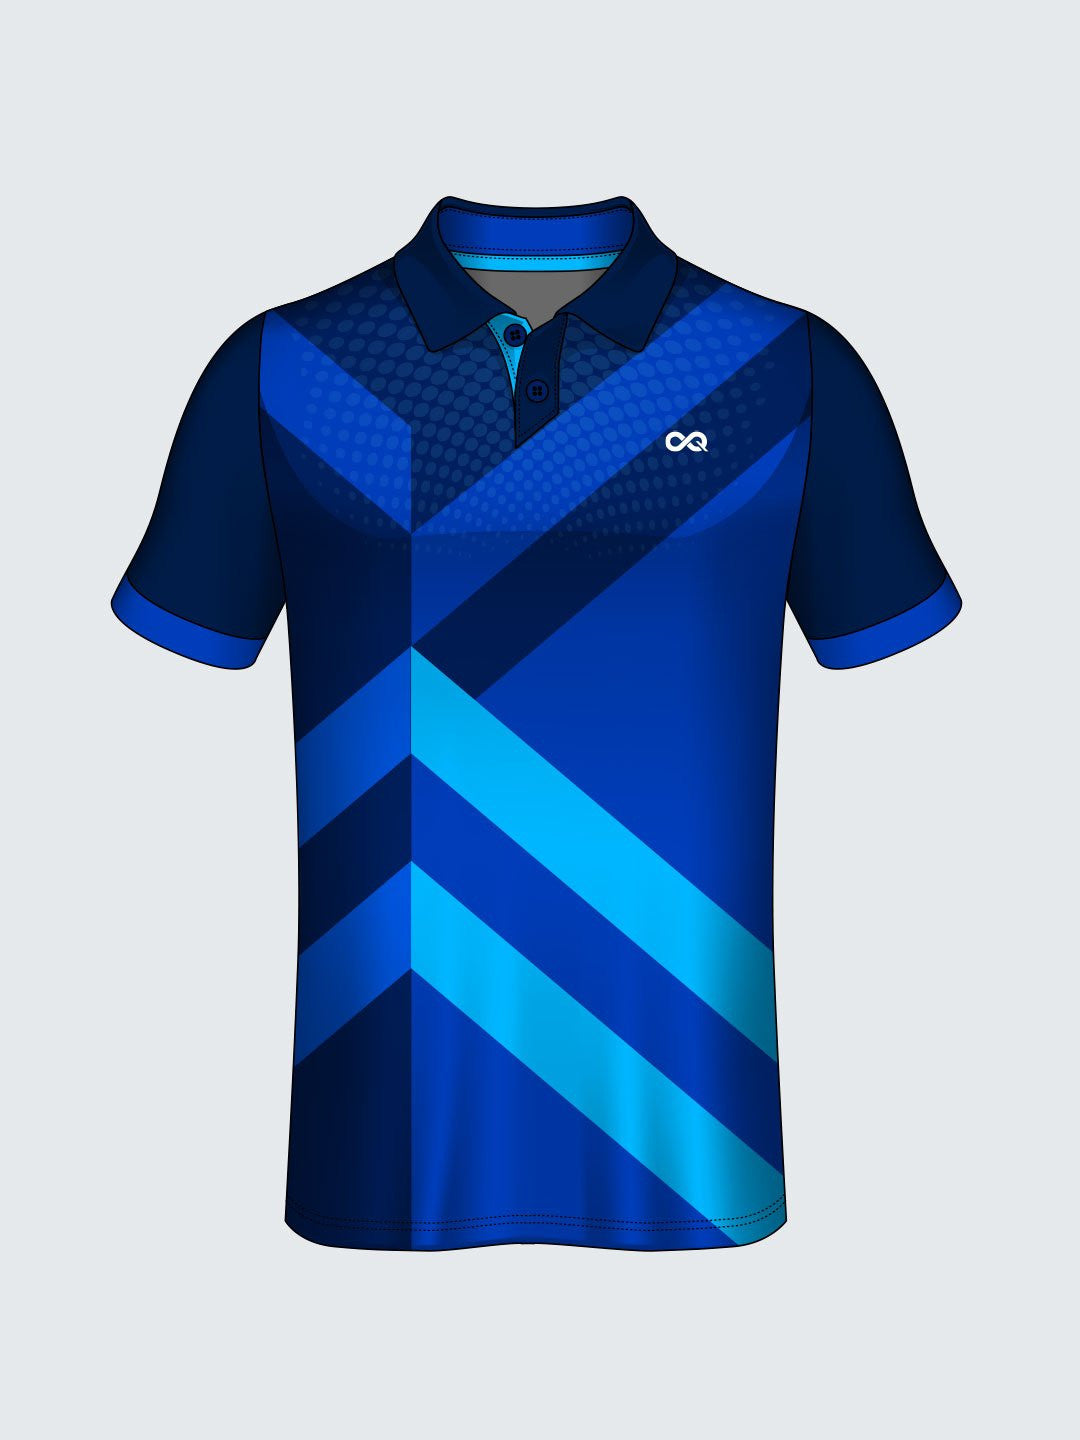 blue cricket jersey